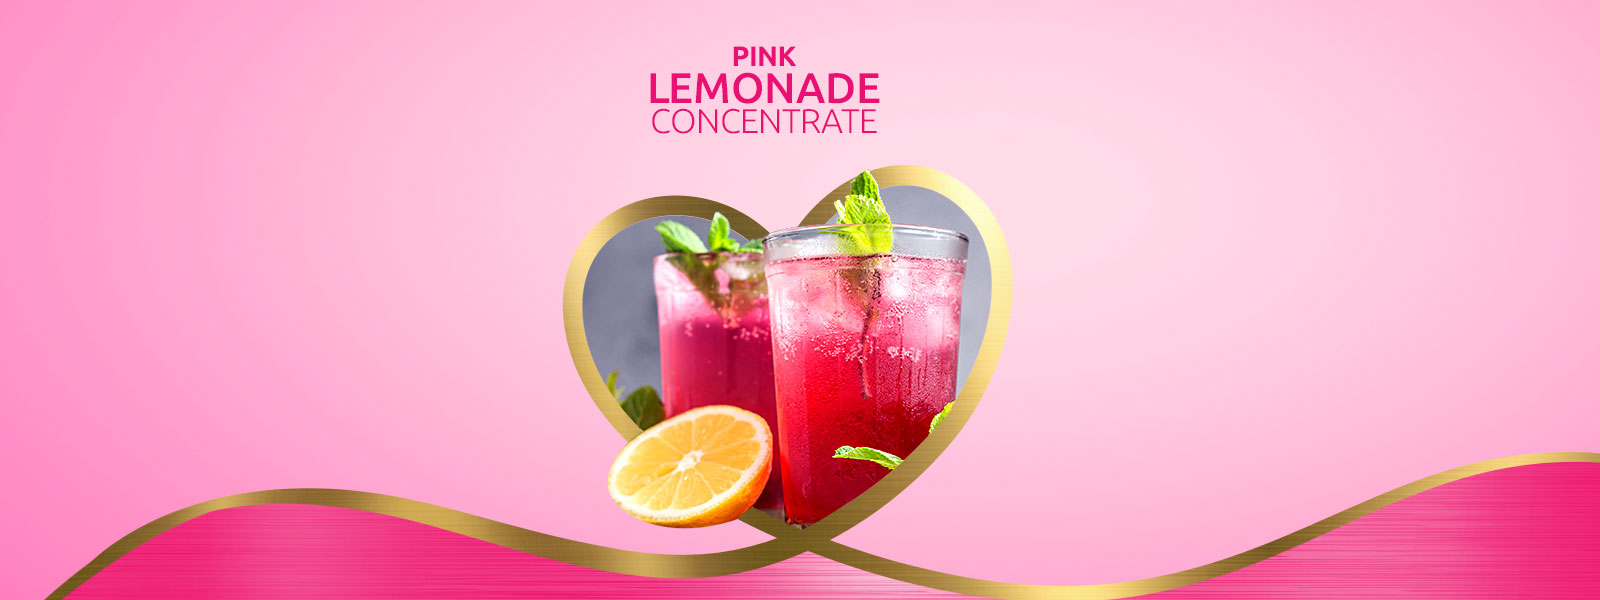 delect-pink-lemonade-concentrate